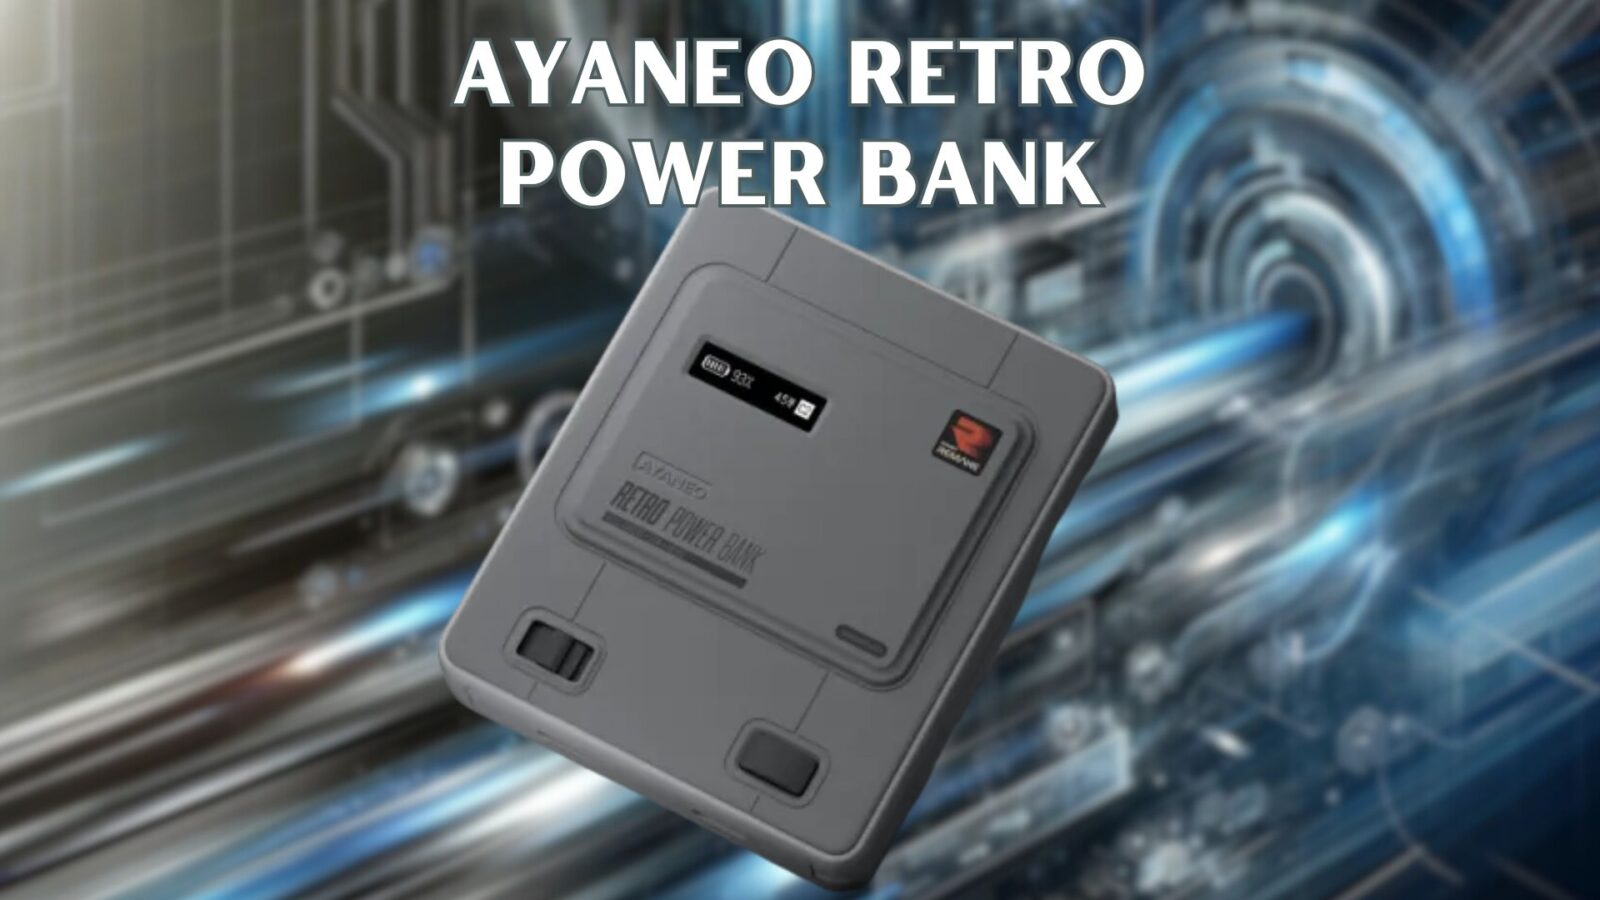 AYANEO Retro Power Bank announced